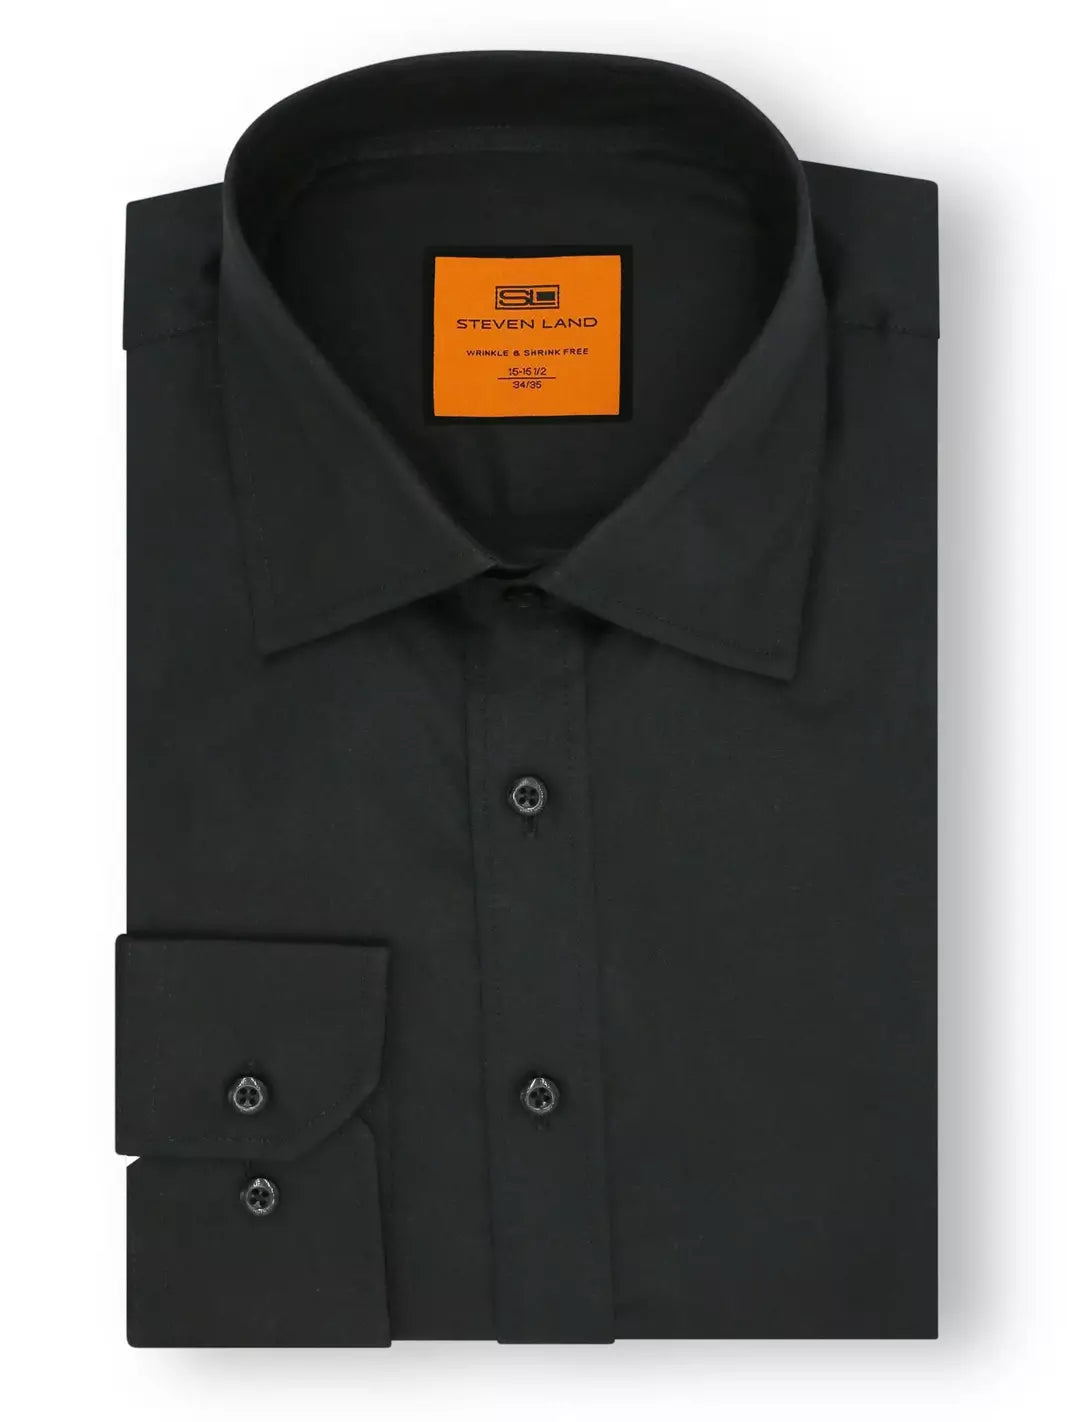 Steven Land SHIRTS Steven Land Mens Solid Black Spread Collar Wrinkle Free Cotton Dress Shirt